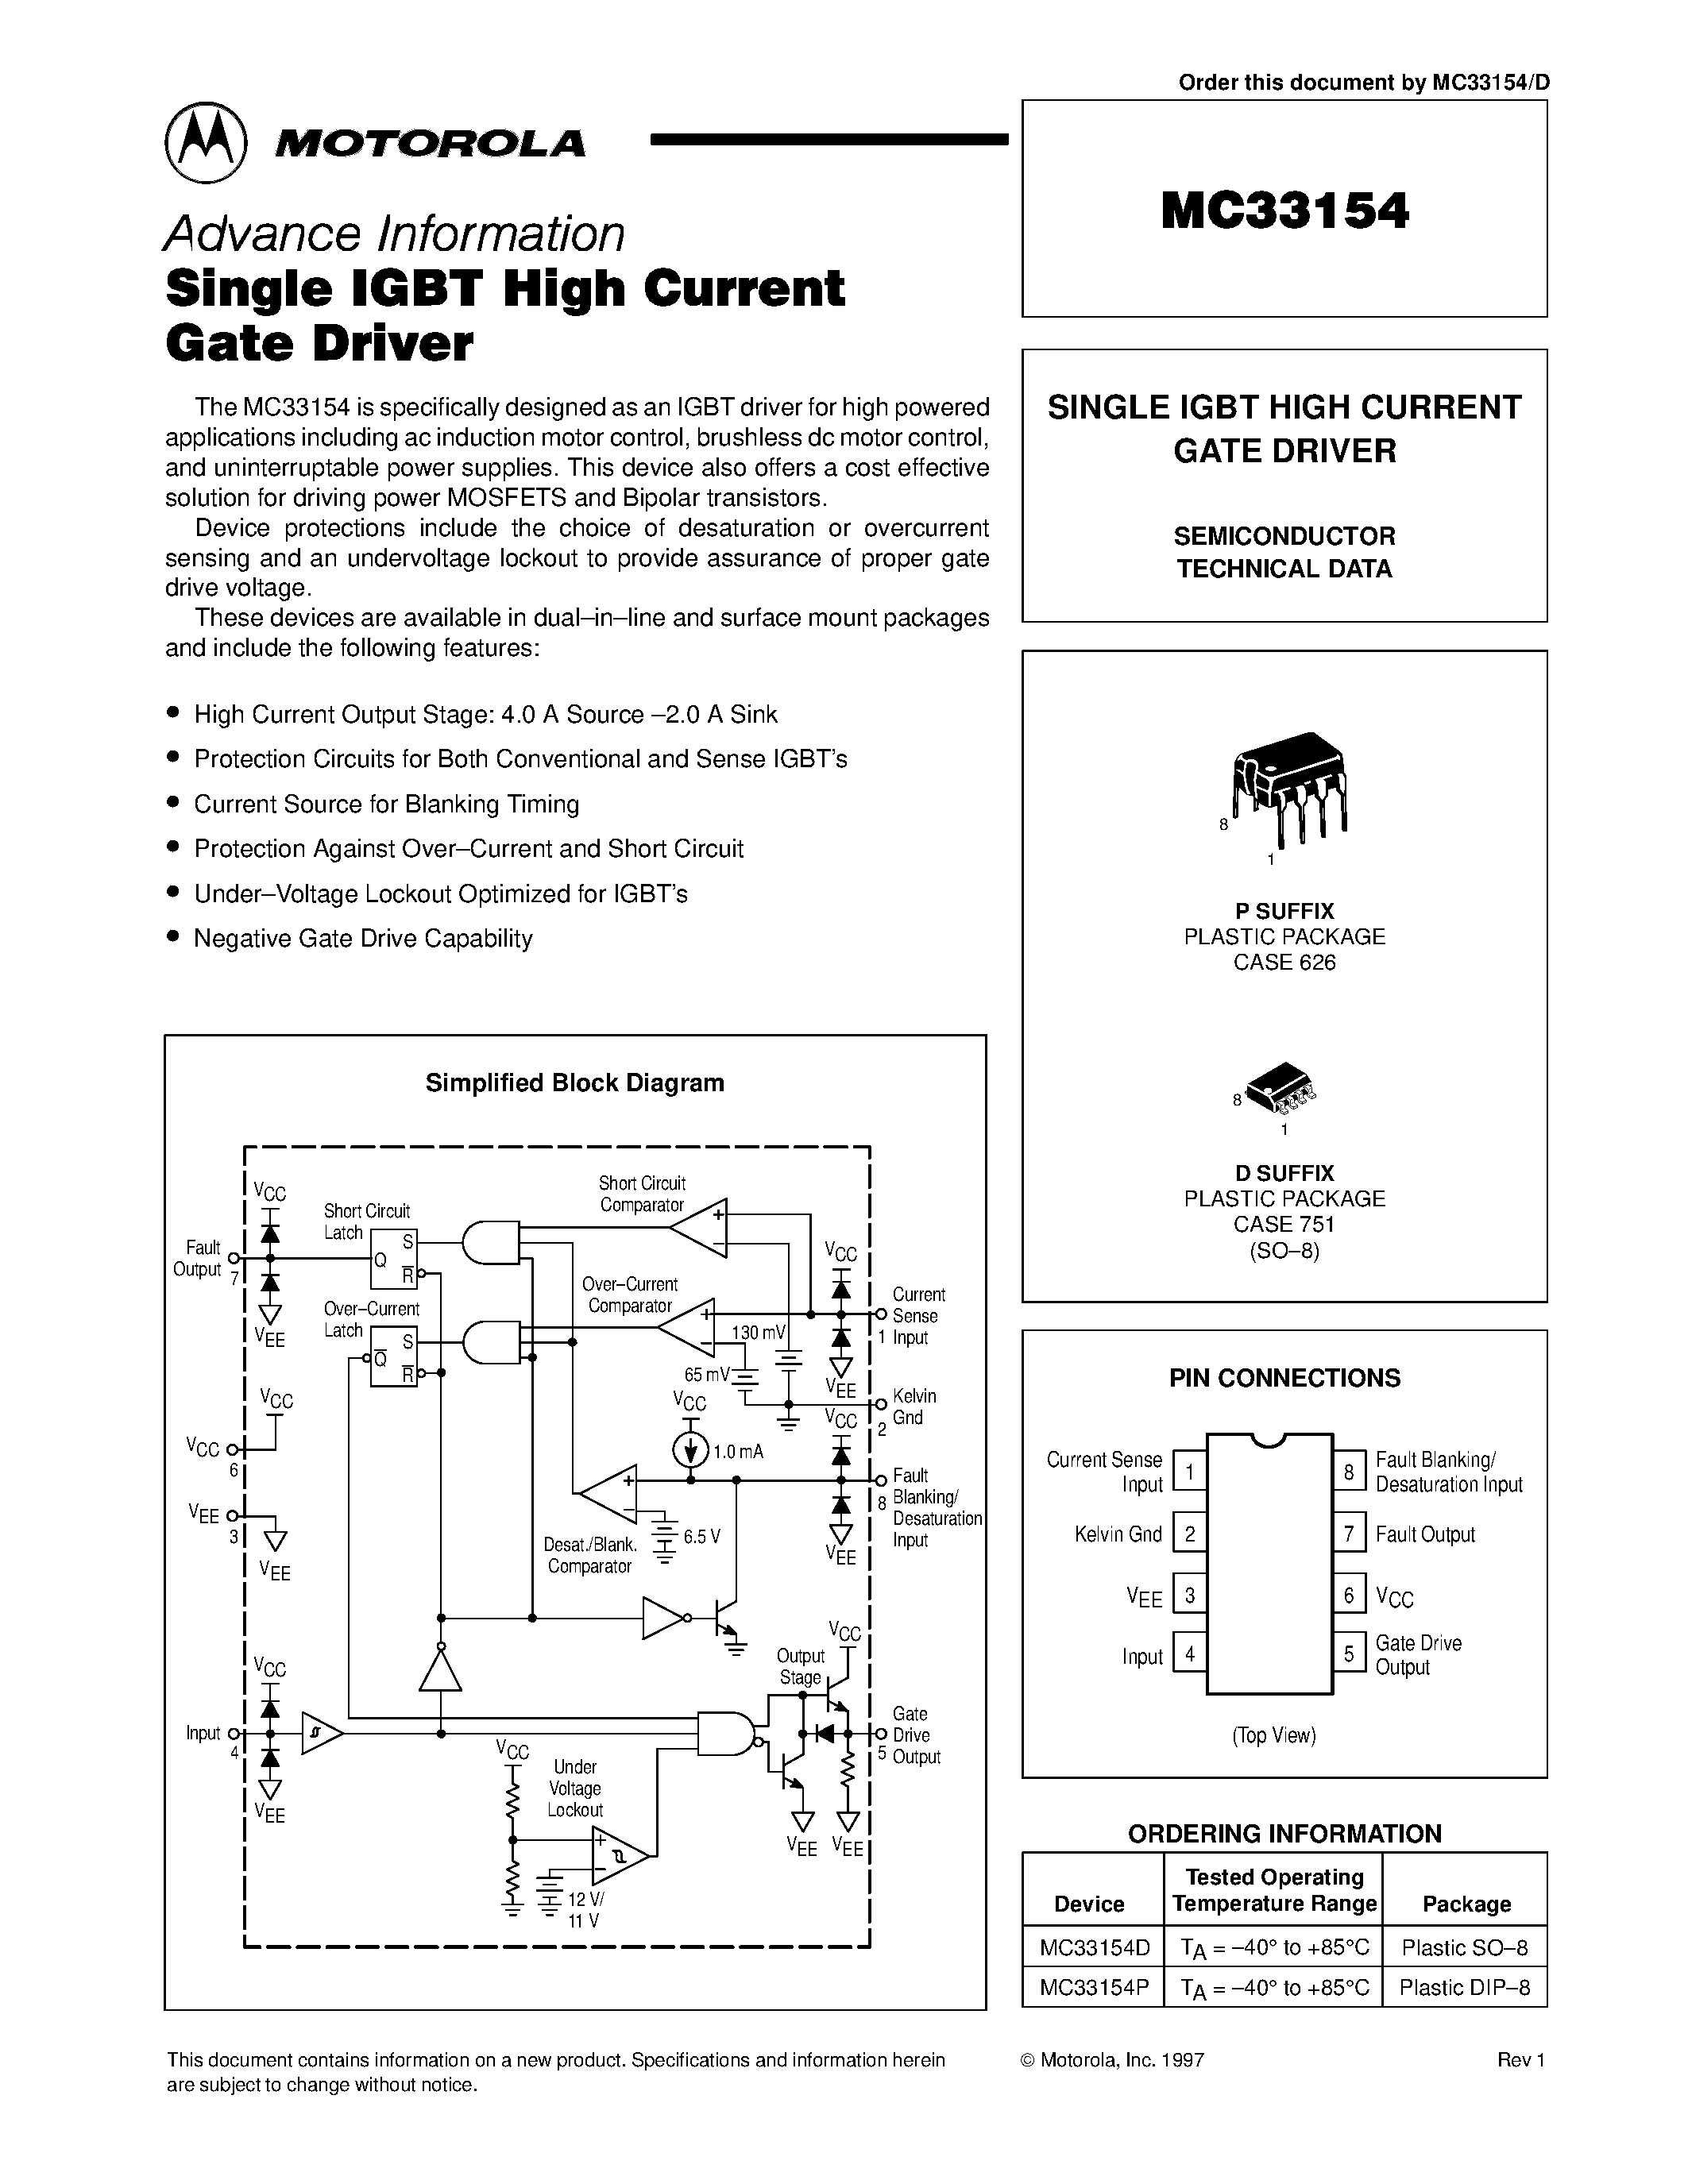 Datasheet MC33154 - SINGLE IGBT HIGH CURRENT GATE DRIVER page 1